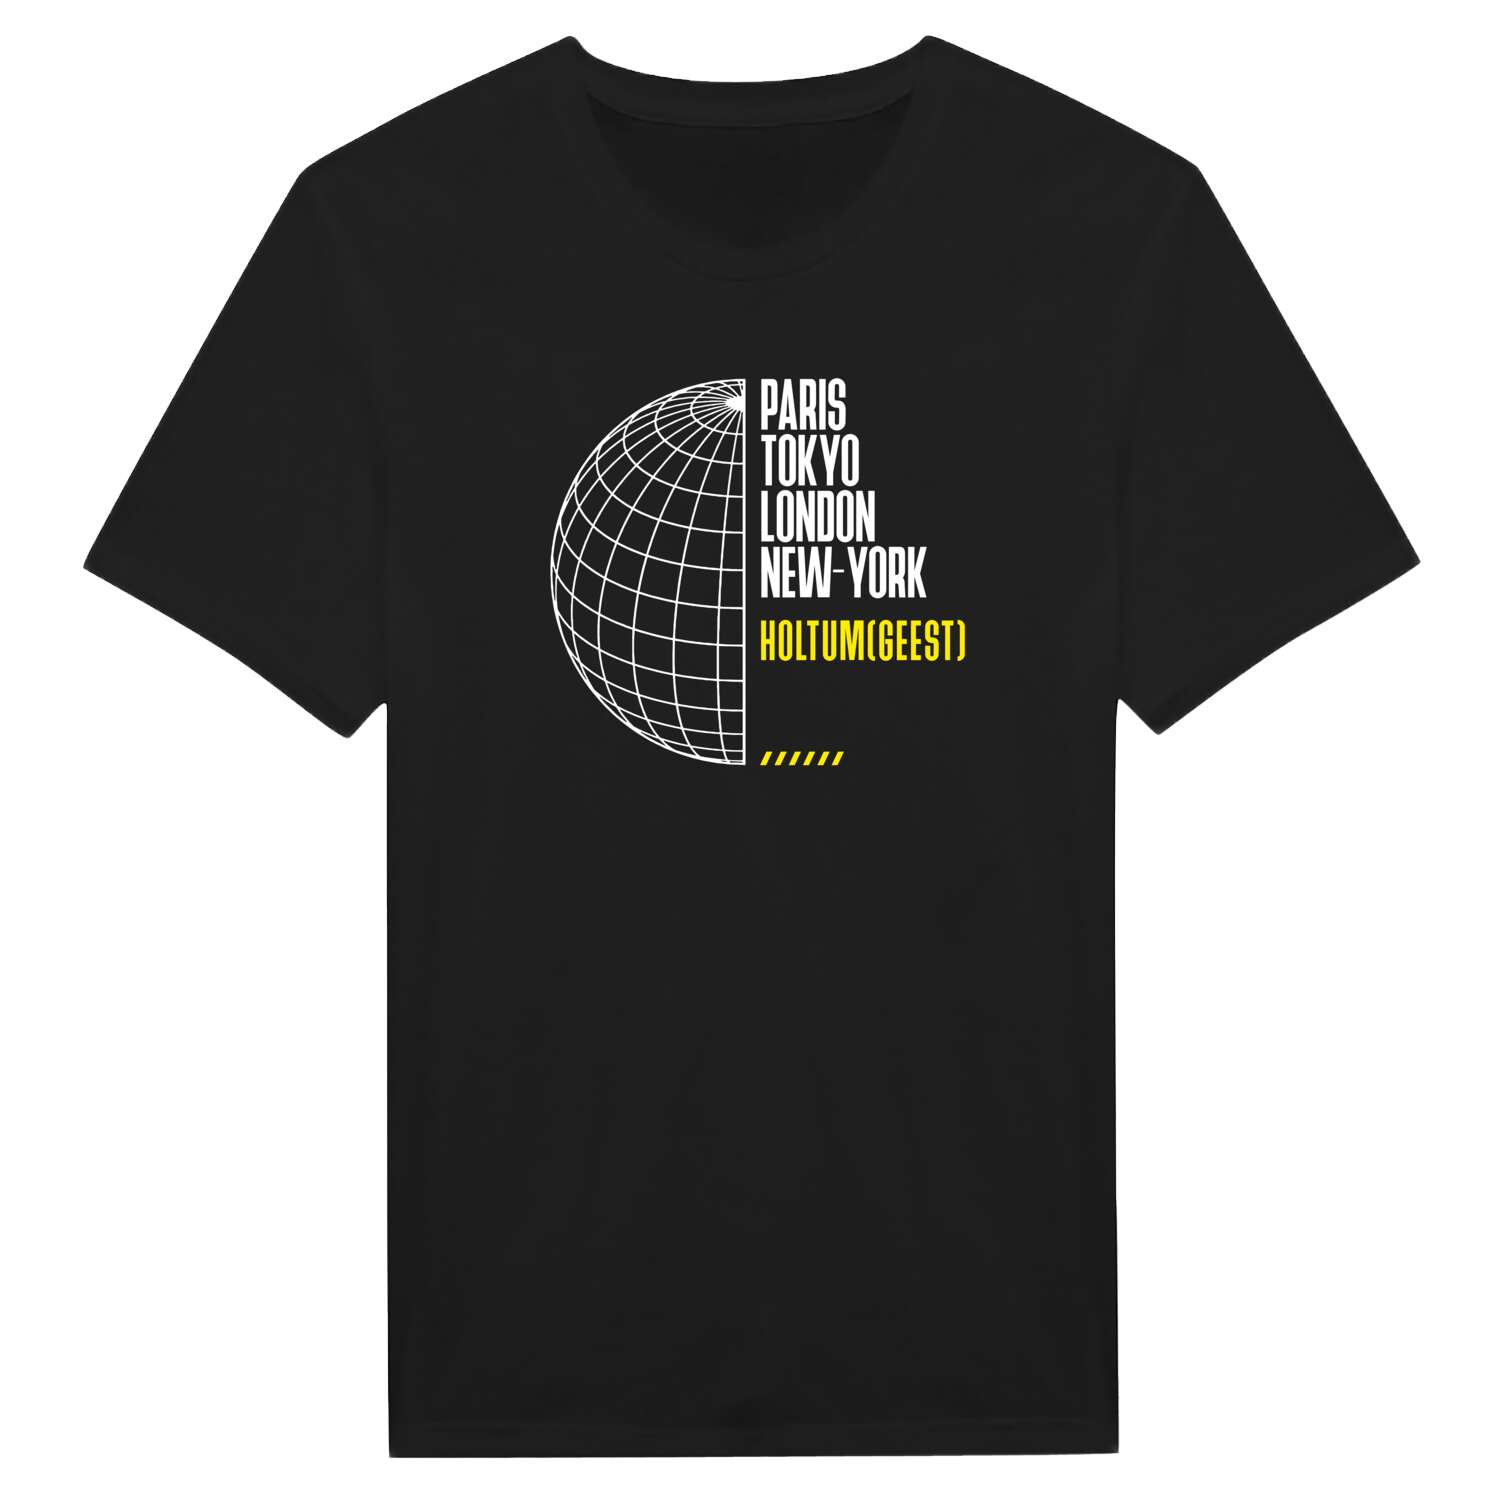 Holtum(Geest) T-Shirt »Paris Tokyo London«